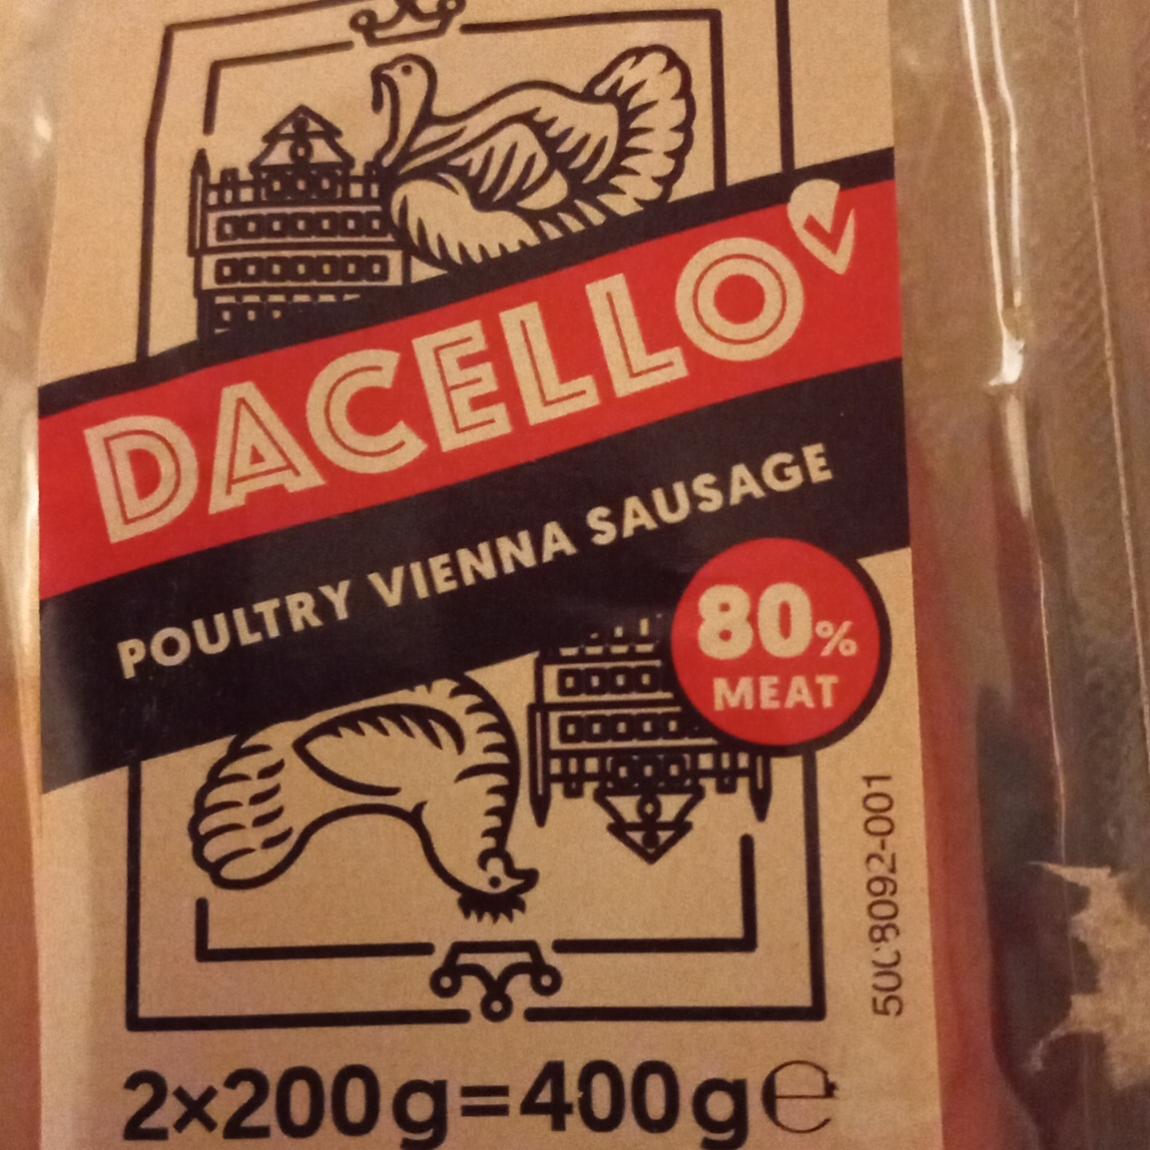 Fotografie - Poultry Vienna Sausage 80% meat Dacello